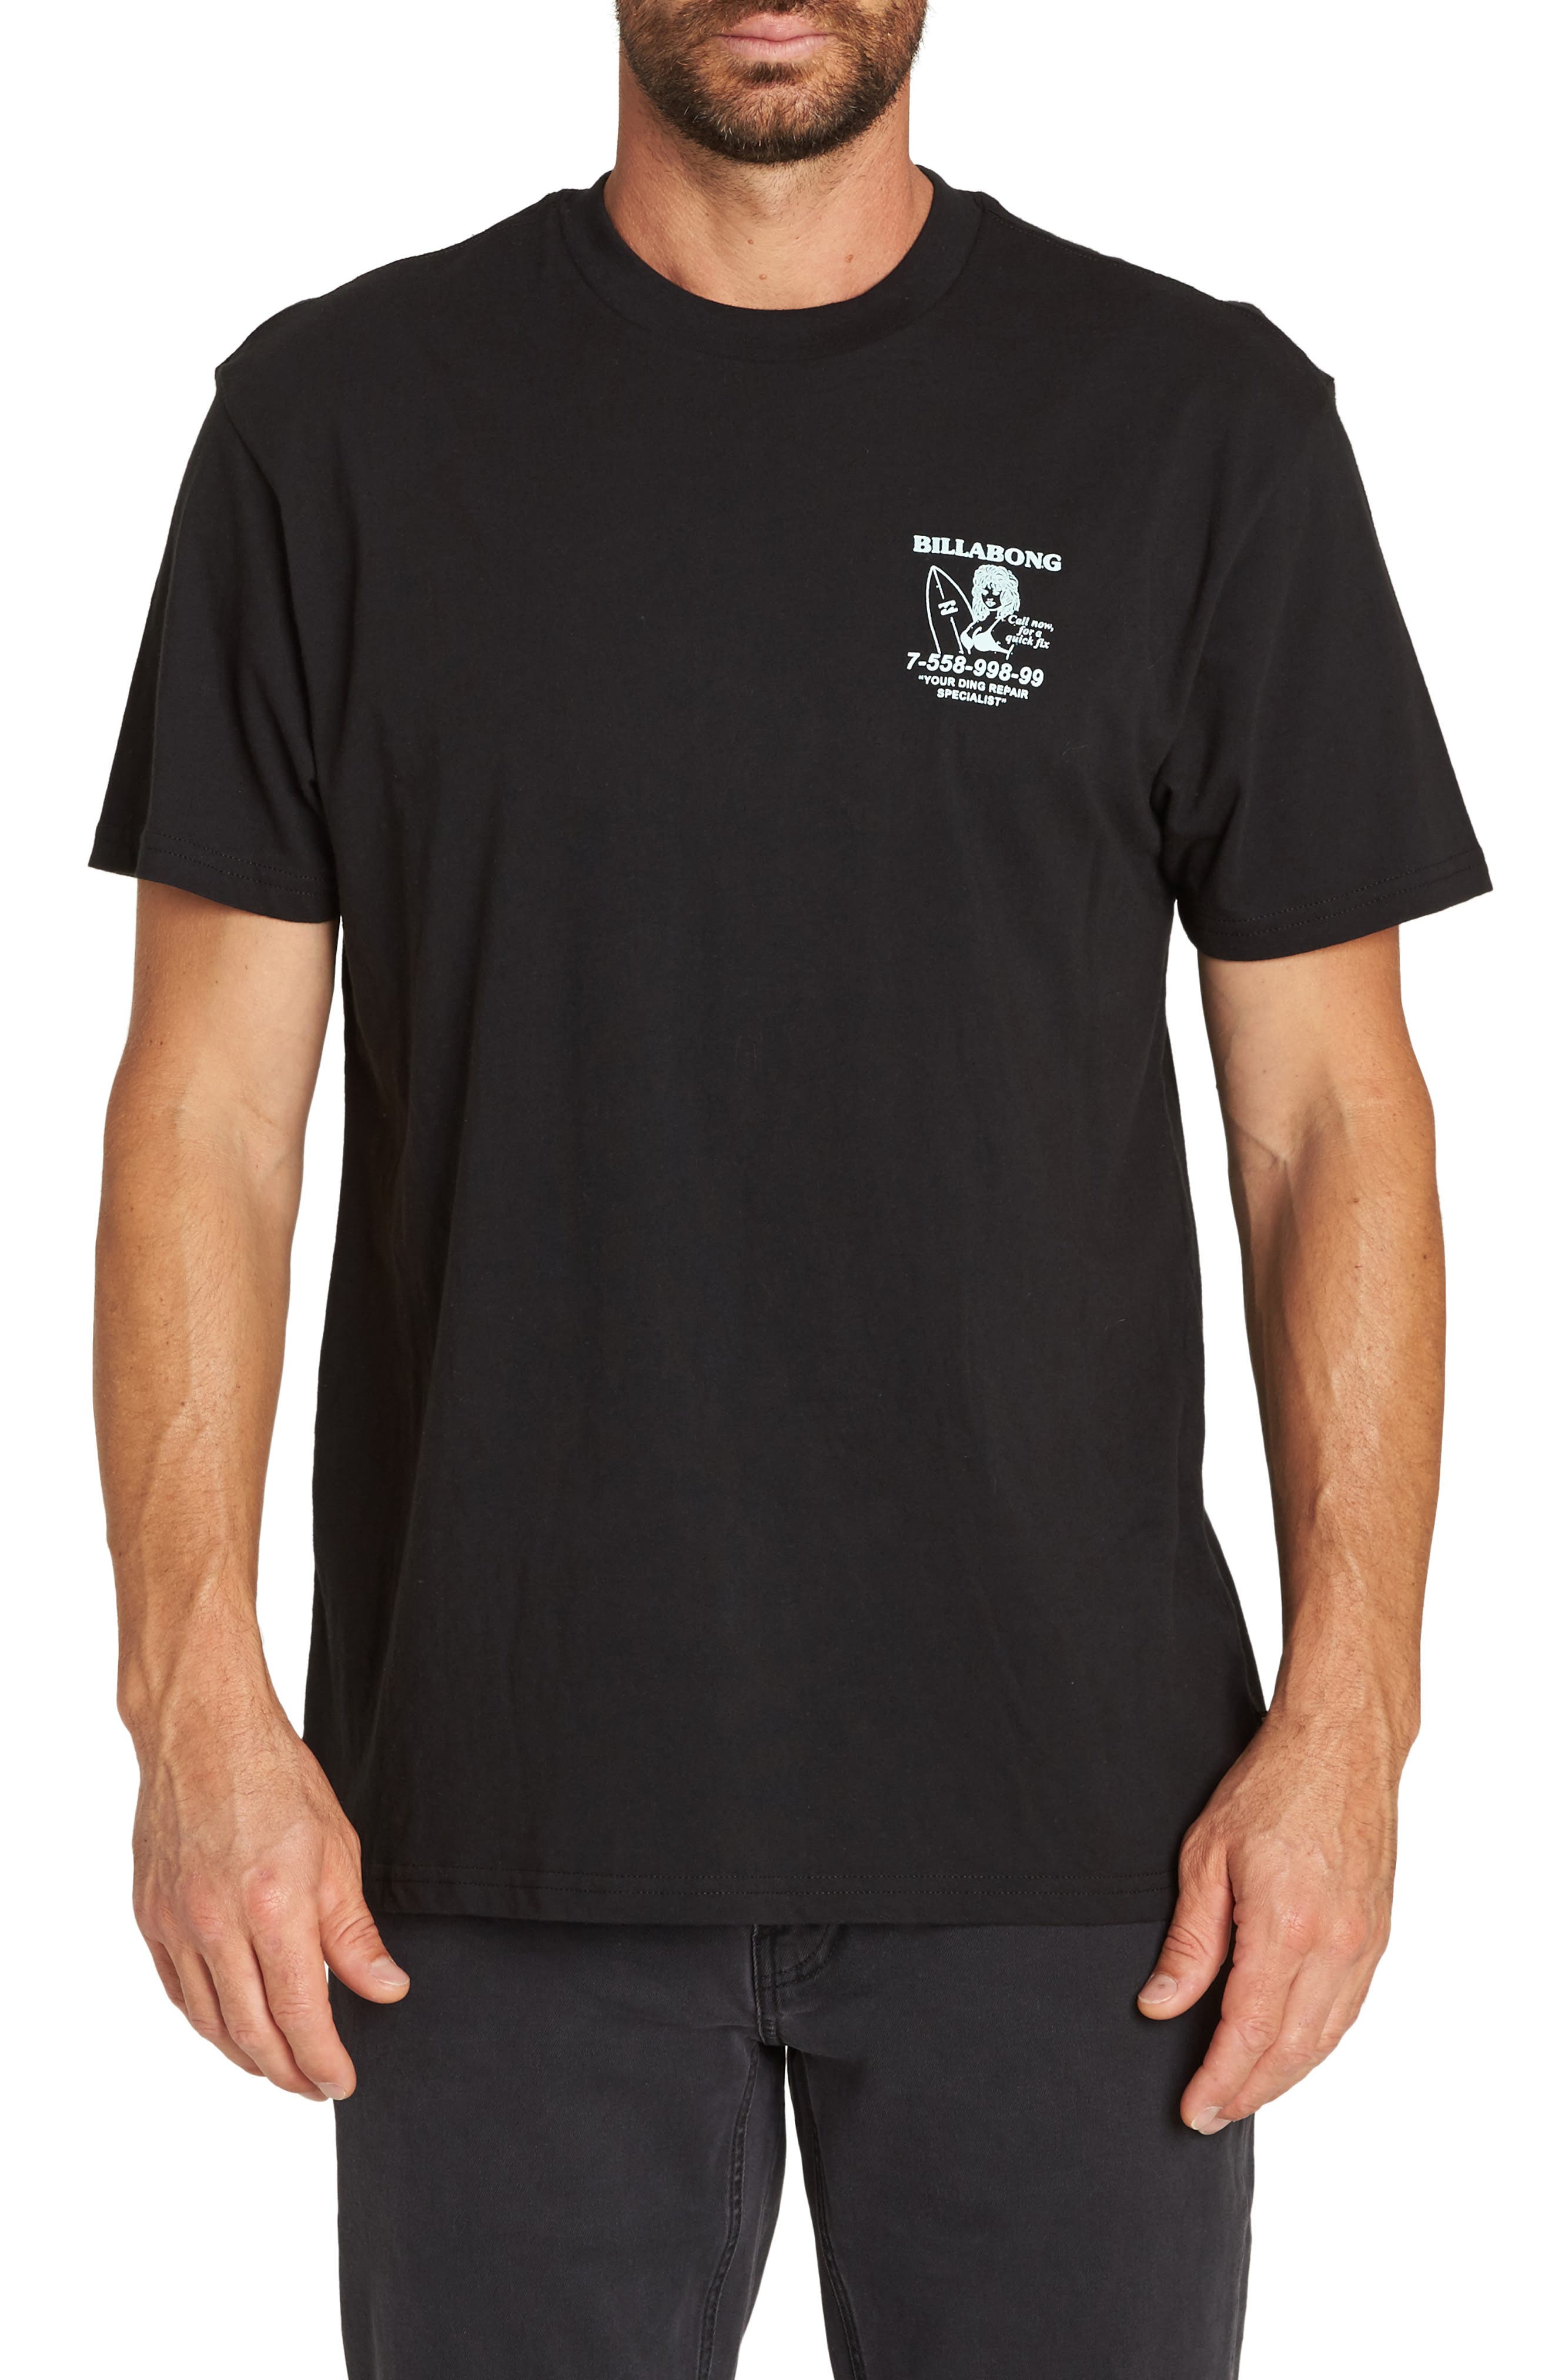 Billabong Men's T-Shirts, stylish comfort clothing